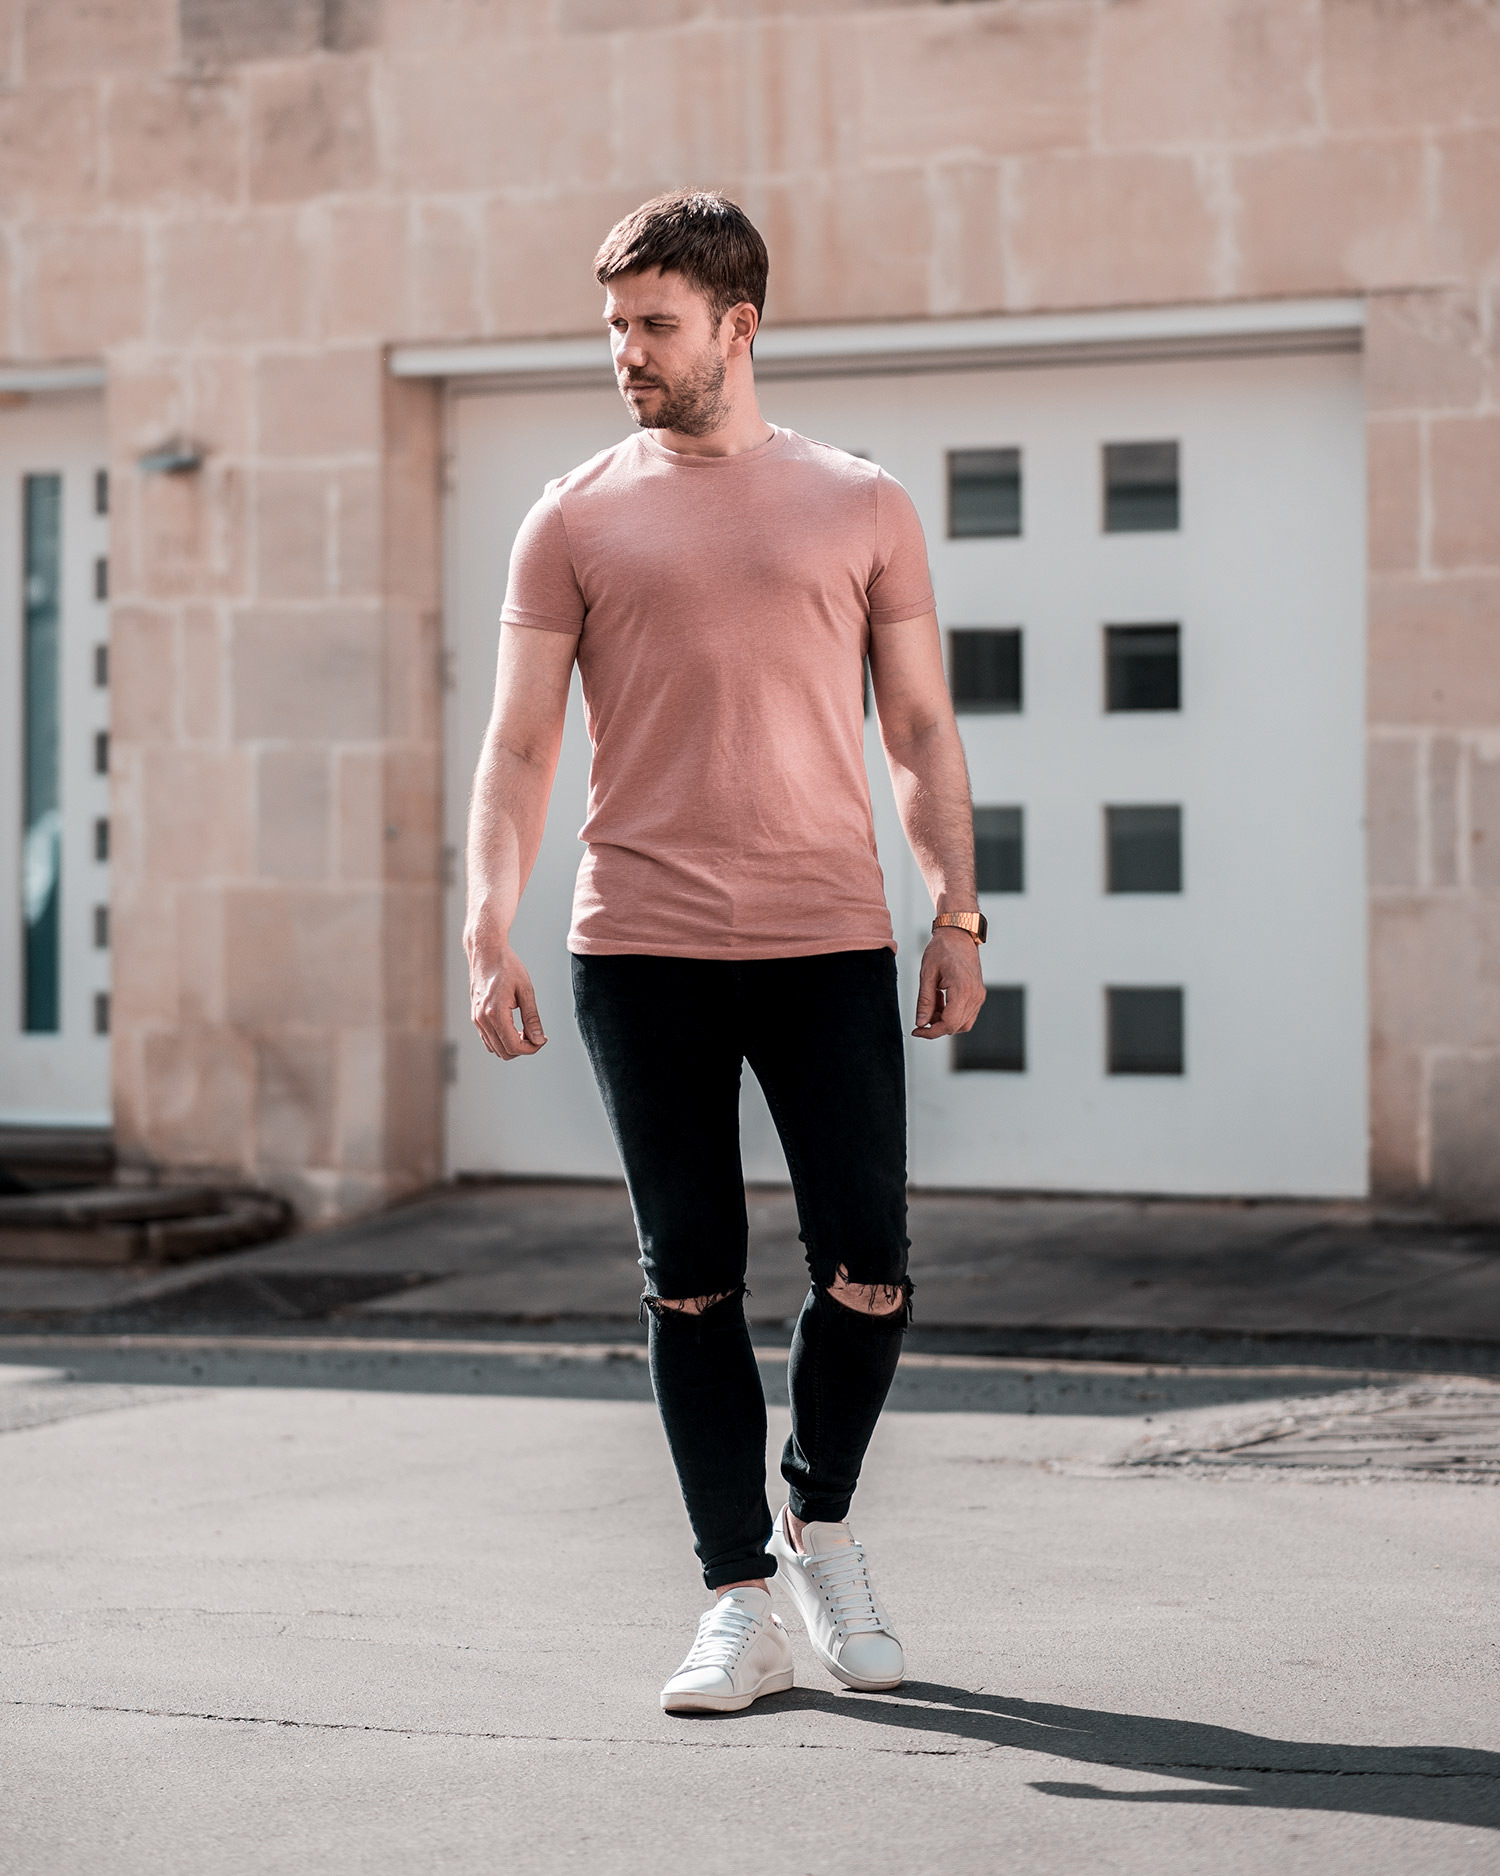 pink t shirt male